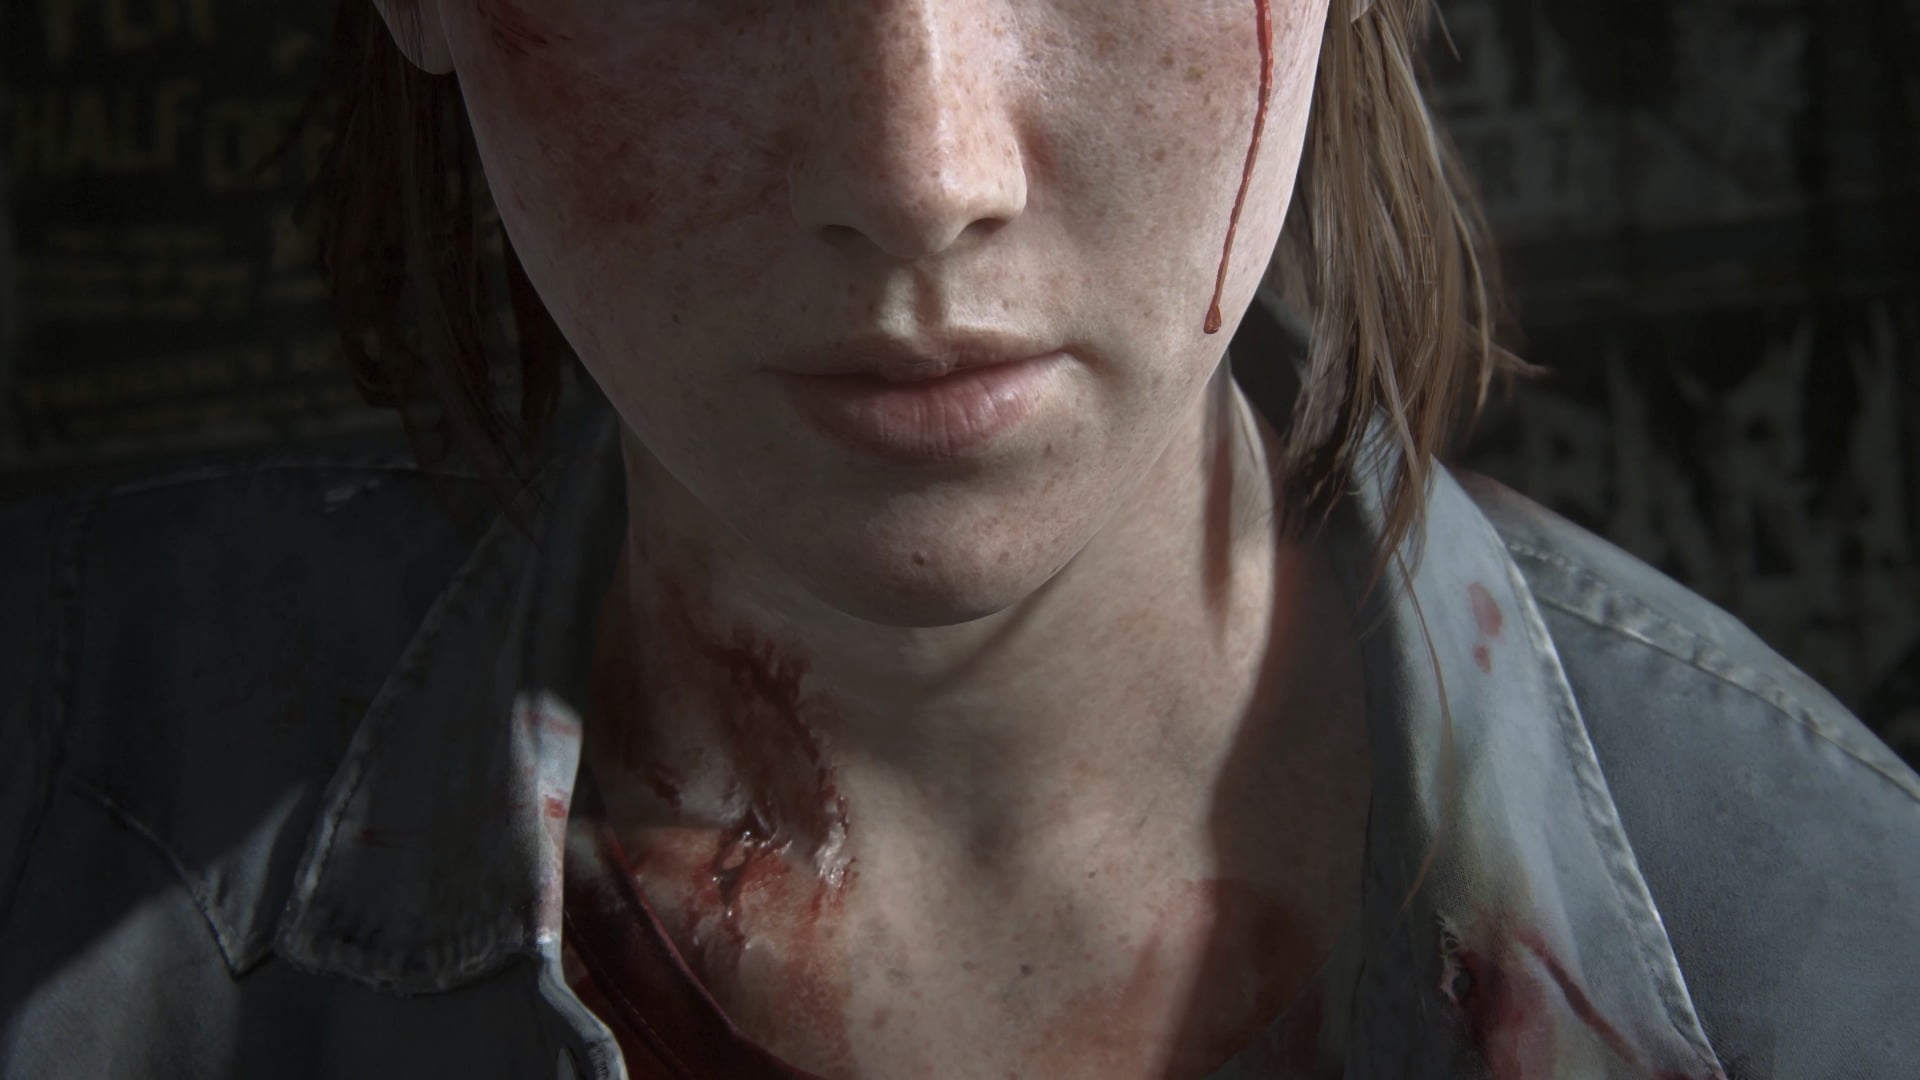 The Last of Us, Ellie, blood, headshot, portrait, one person